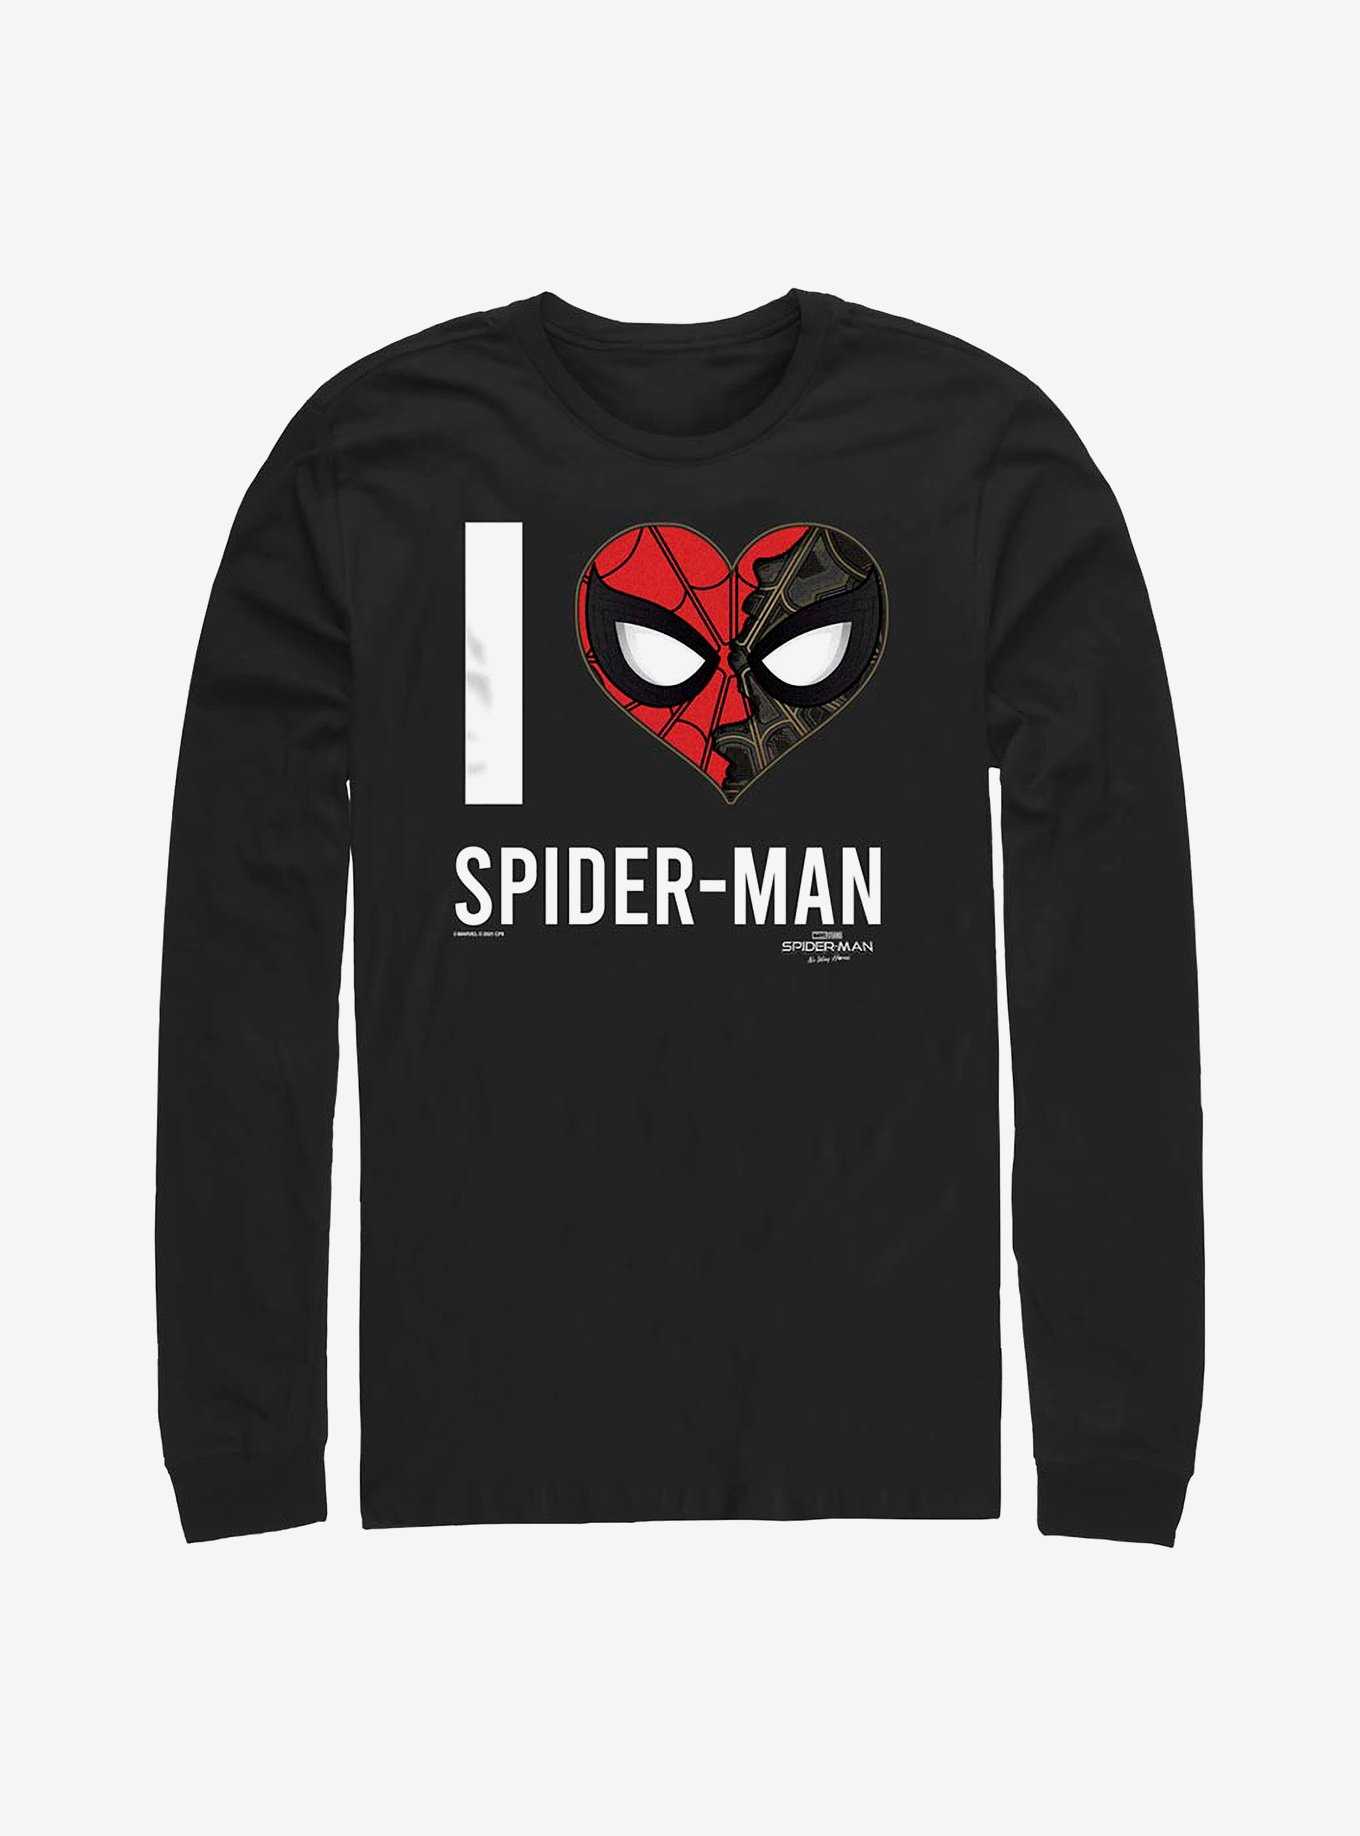 Marvel Spider-Man I Heart Spider-Man Long-Sleeve T-Shirt, , hi-res